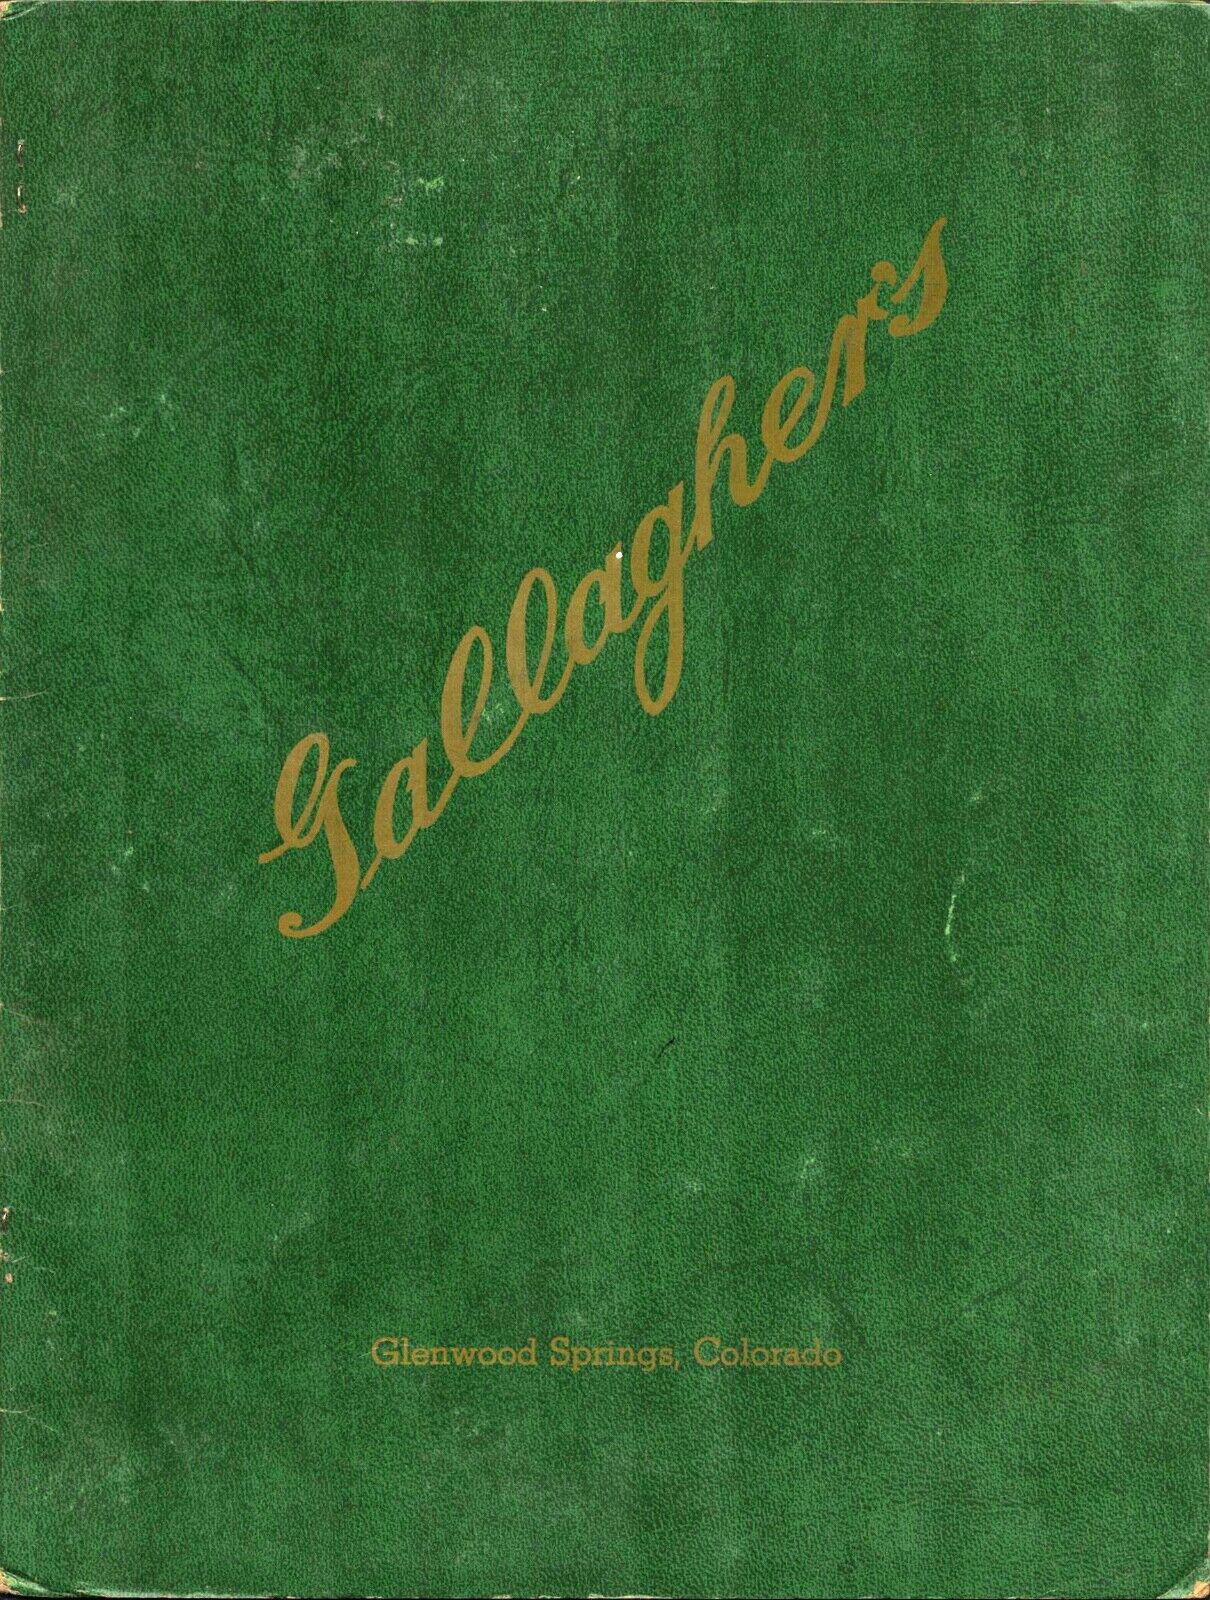 1970s GALLAGHER\'S vintage restaurant dinner menu GLENWOOD SPRINGS, COLORADO